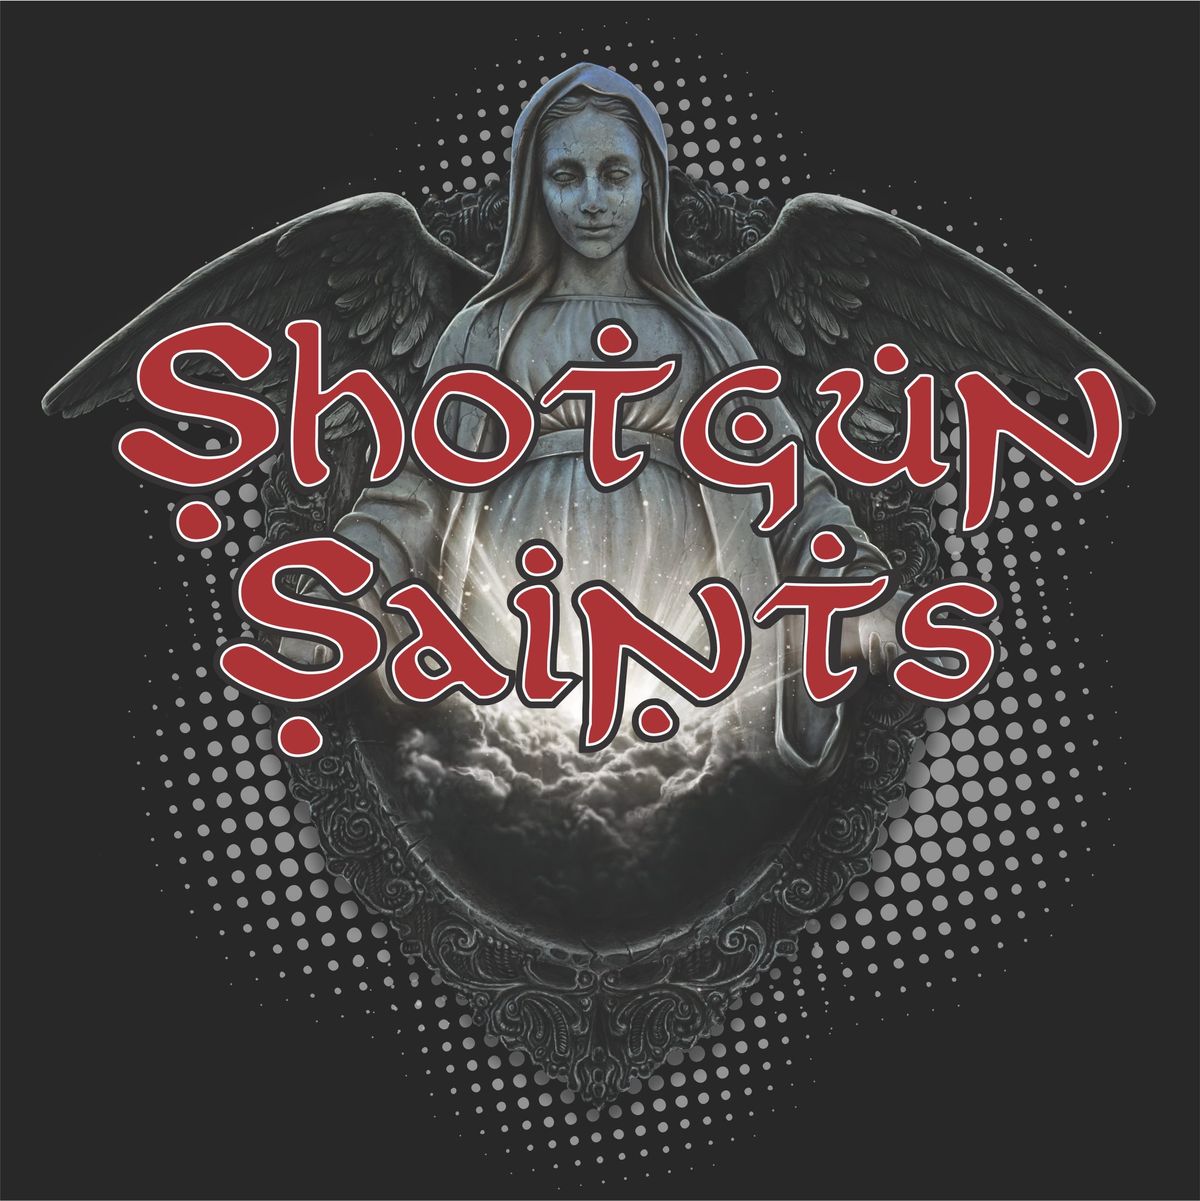 Shotgun Saints at The Trail House